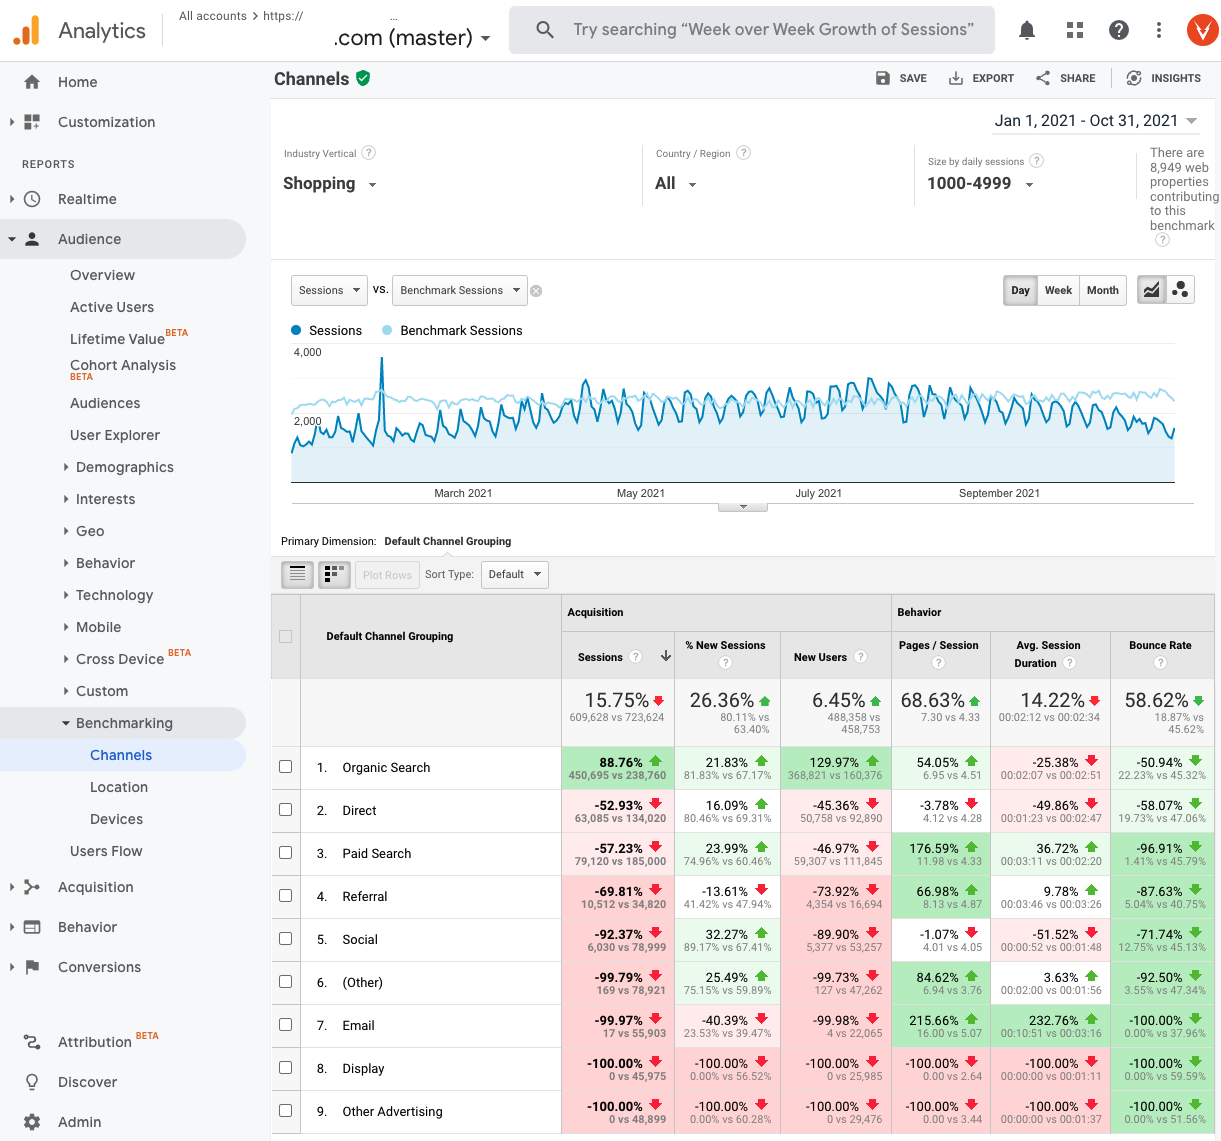 Google Analytics Benchmarking Report